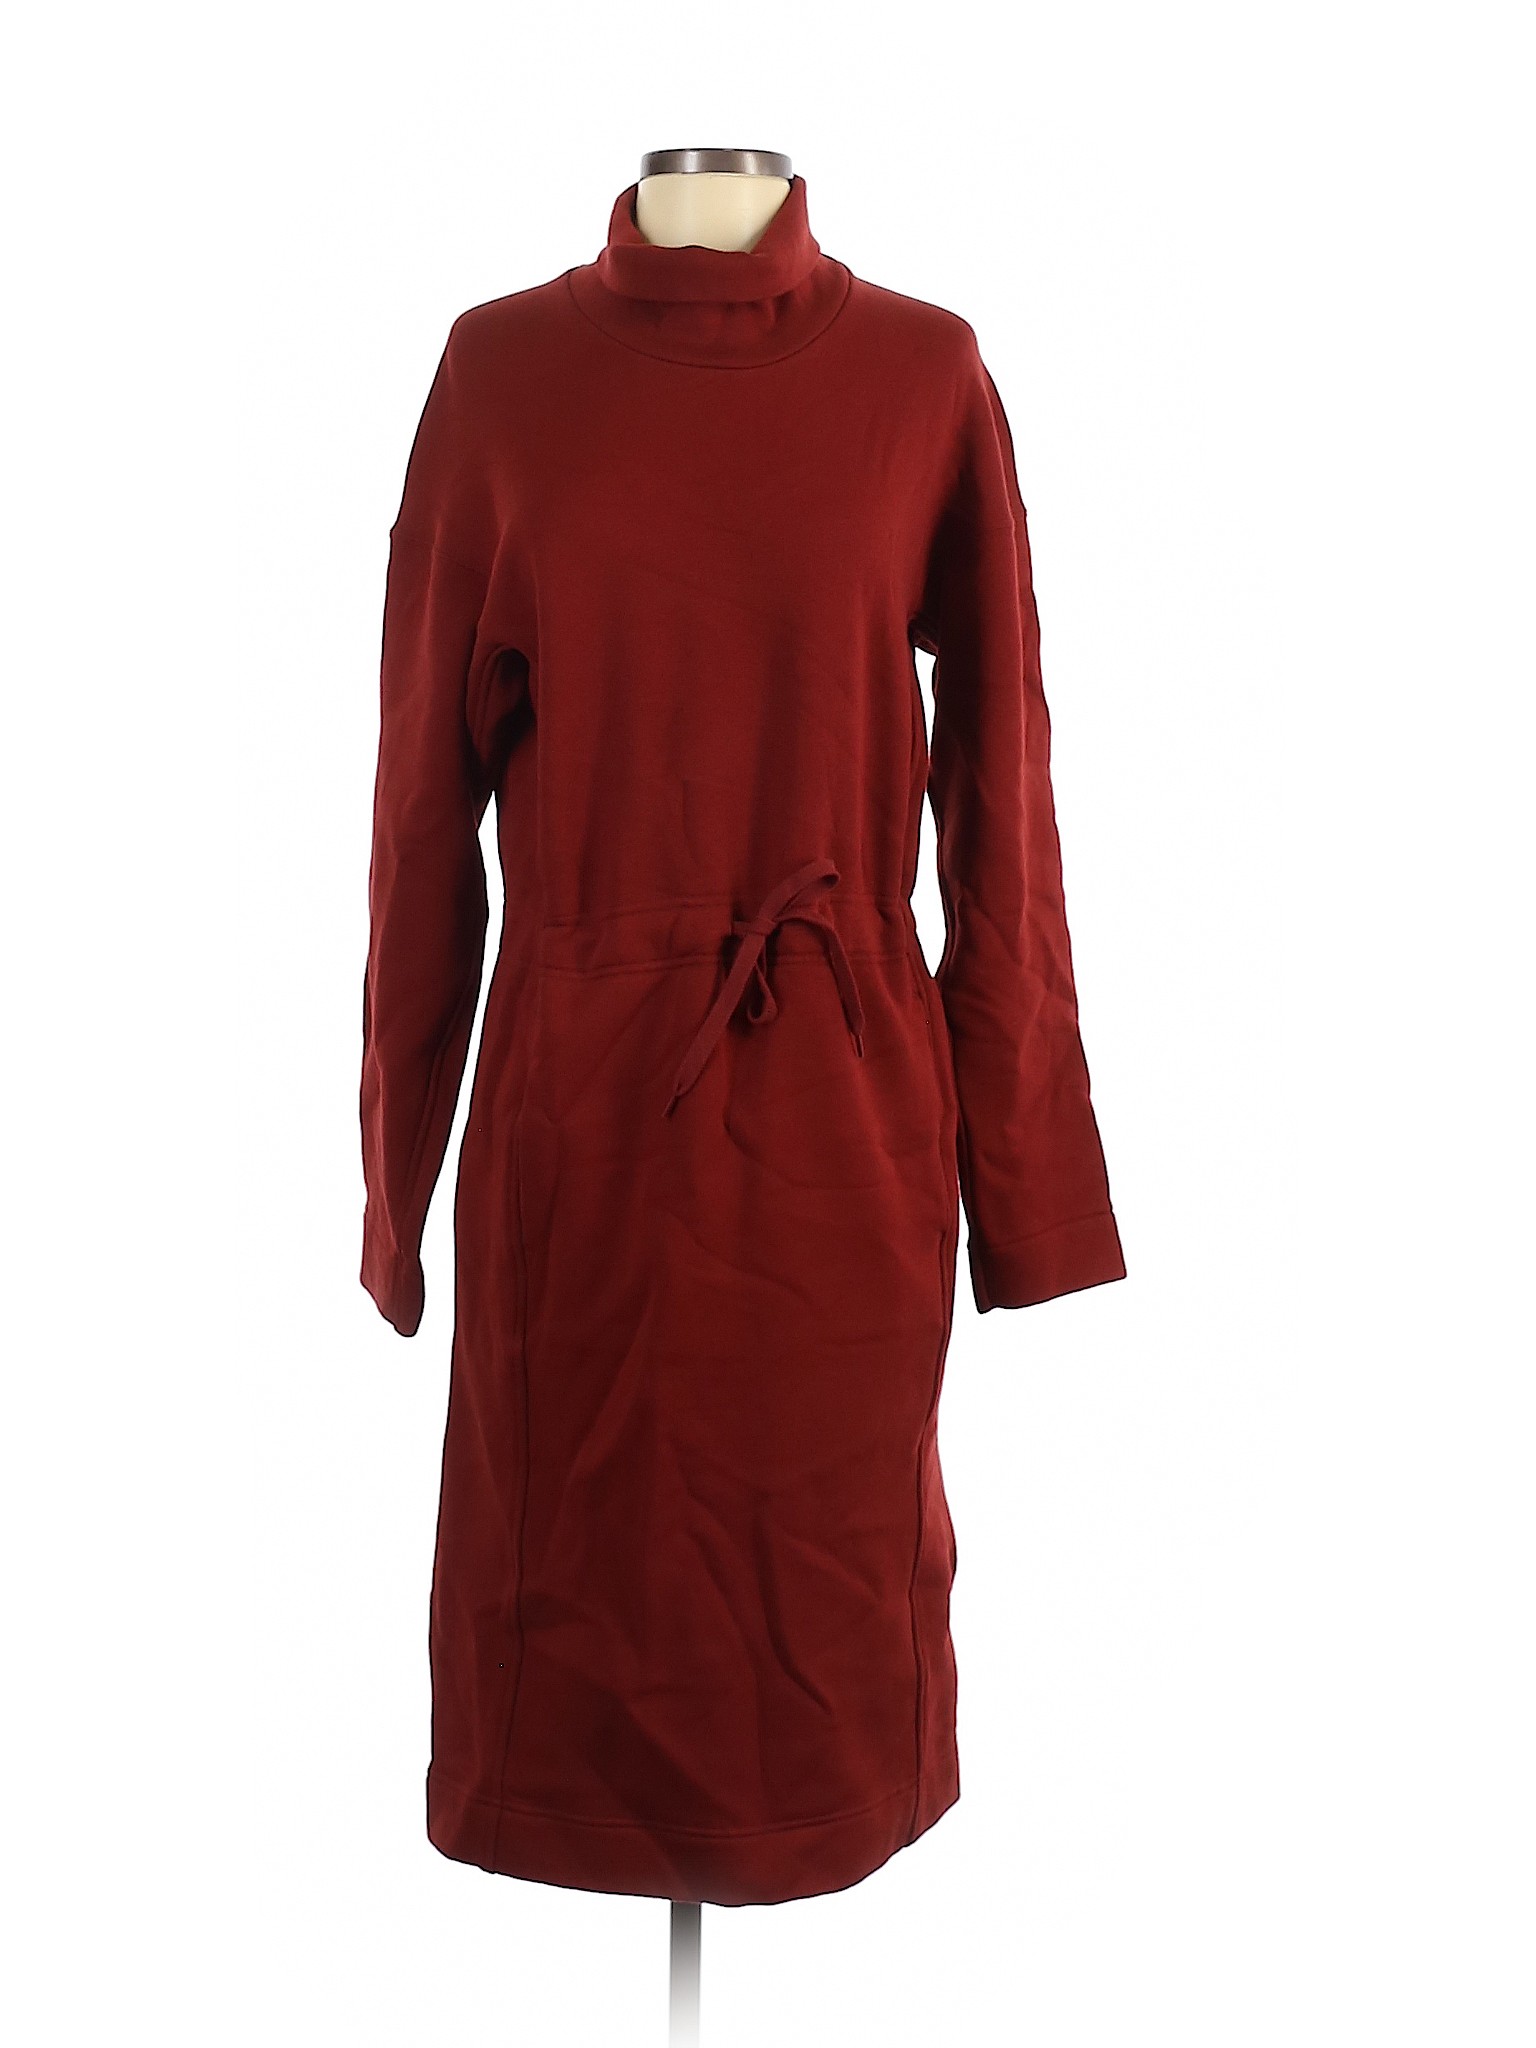 Uniqlo U Women Orange Casual Dress XS | eBay